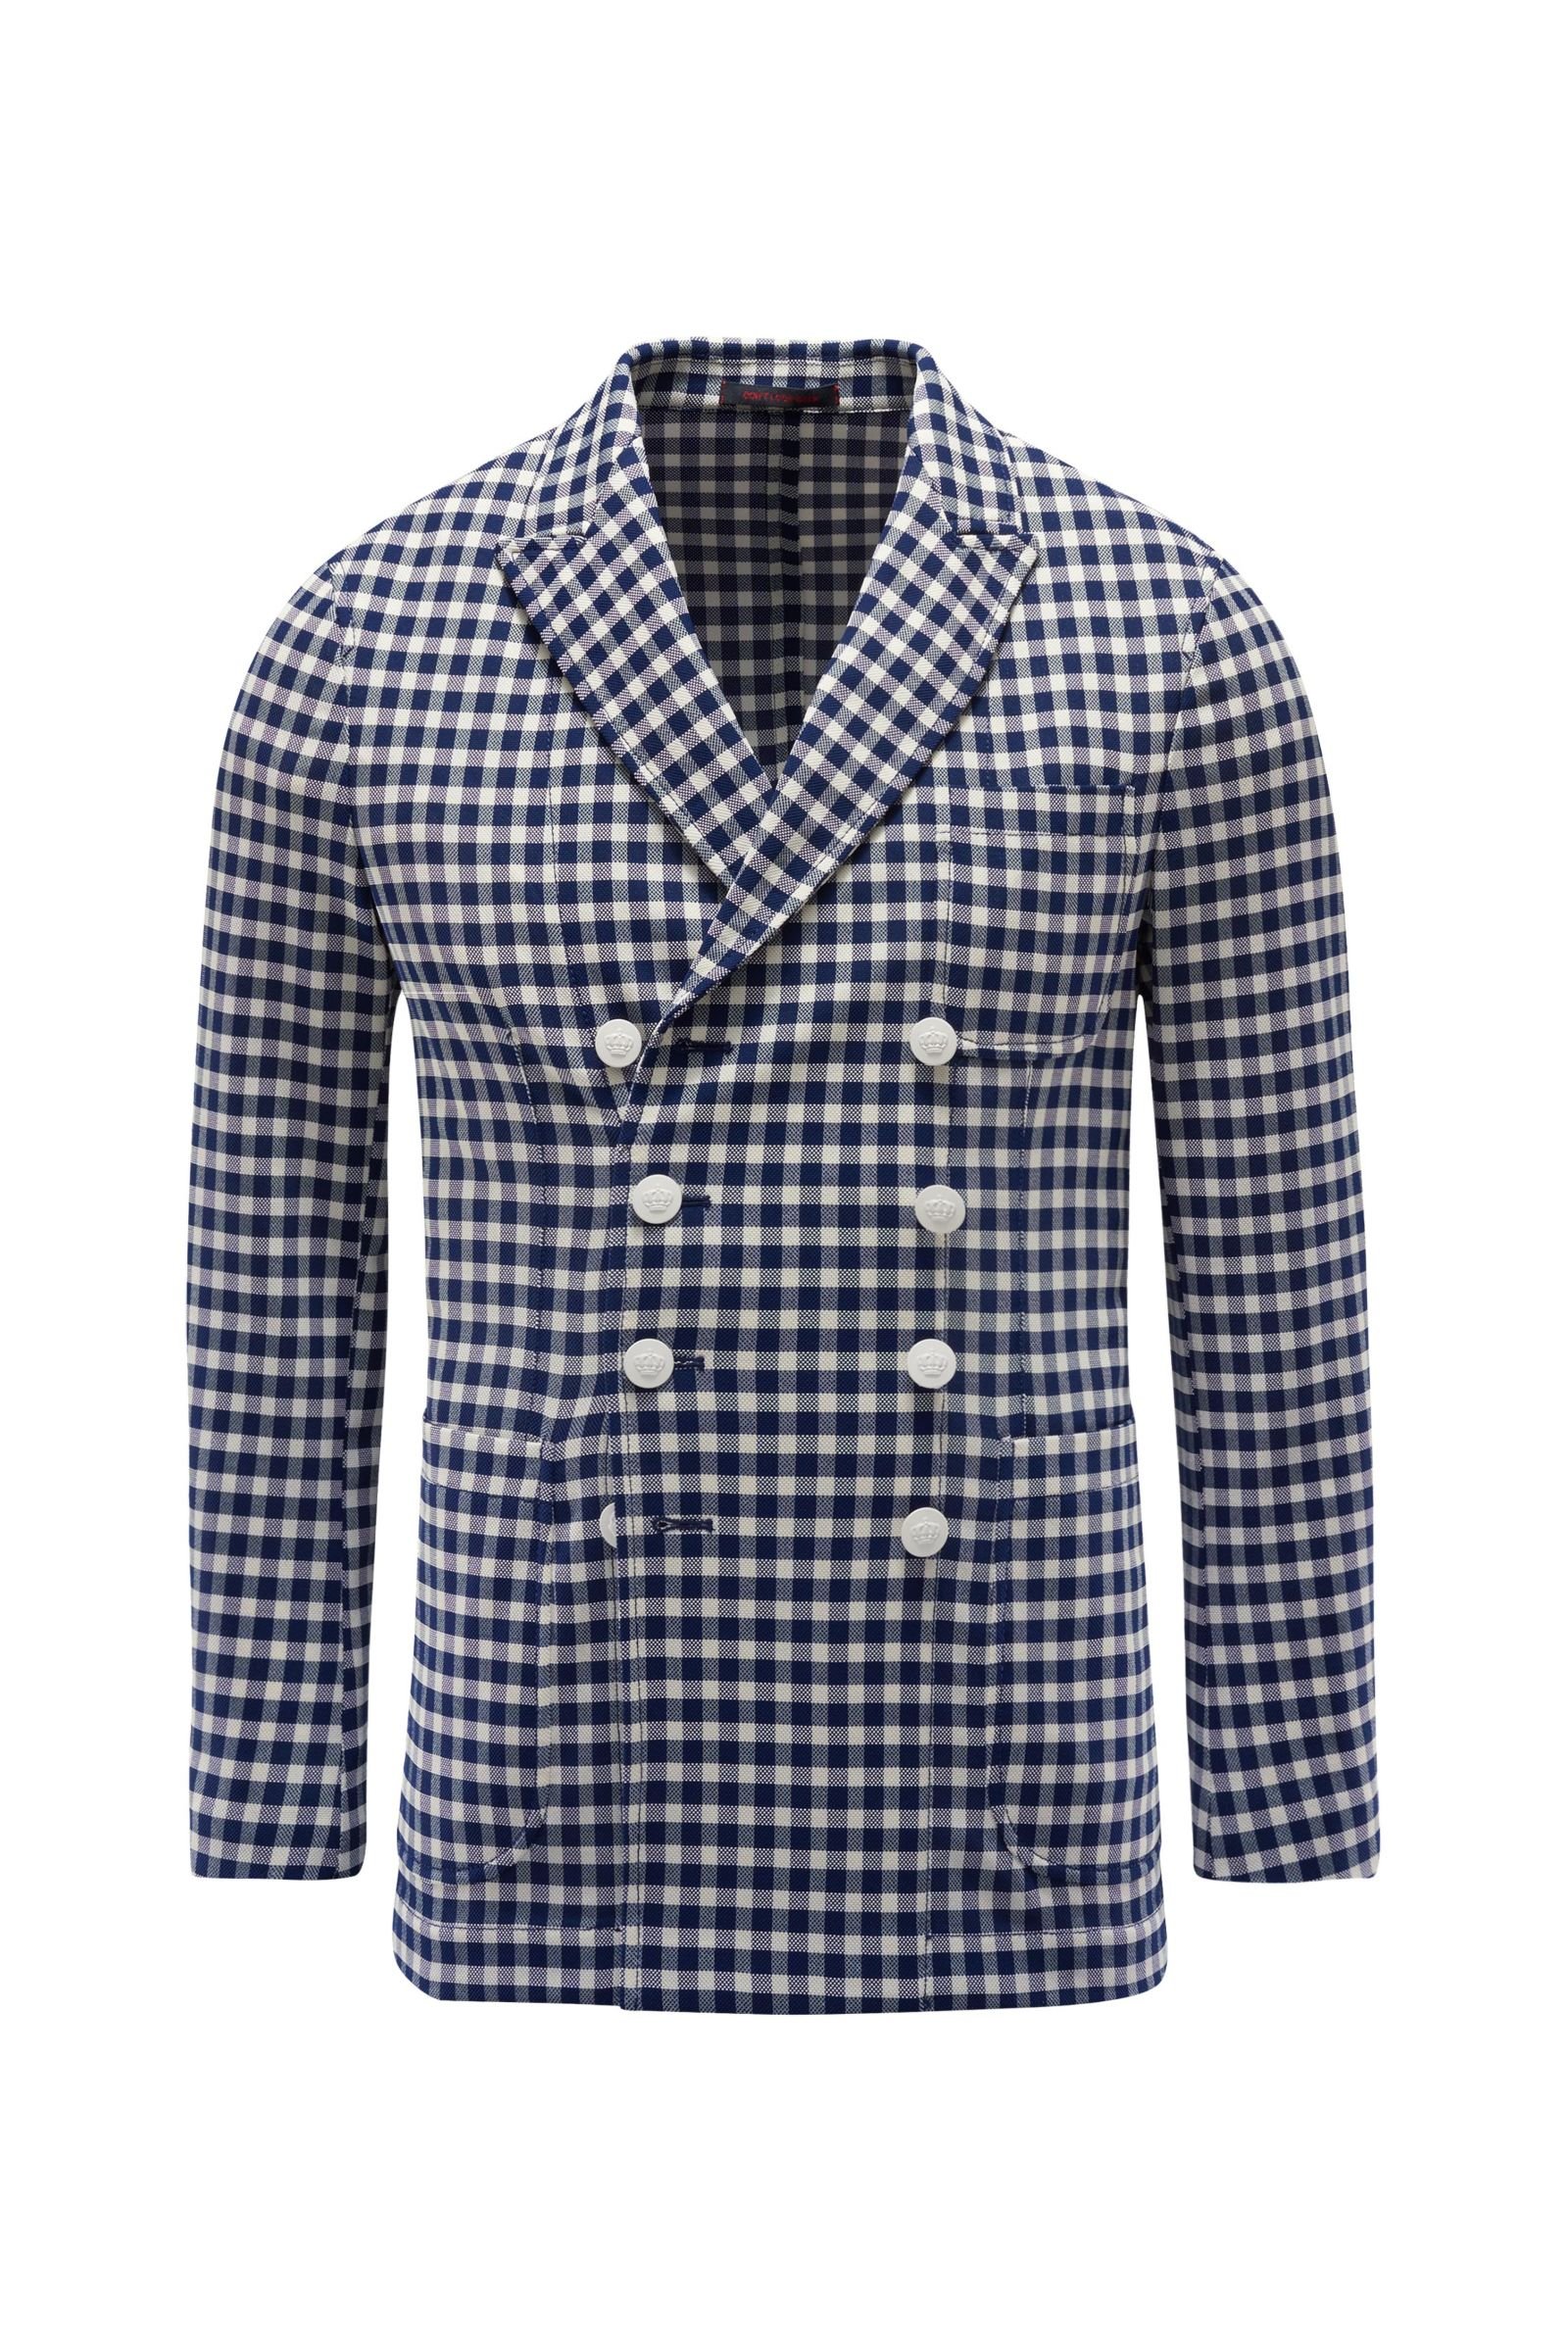 Smart-casual jacket 'Ziggy' blue/white checked